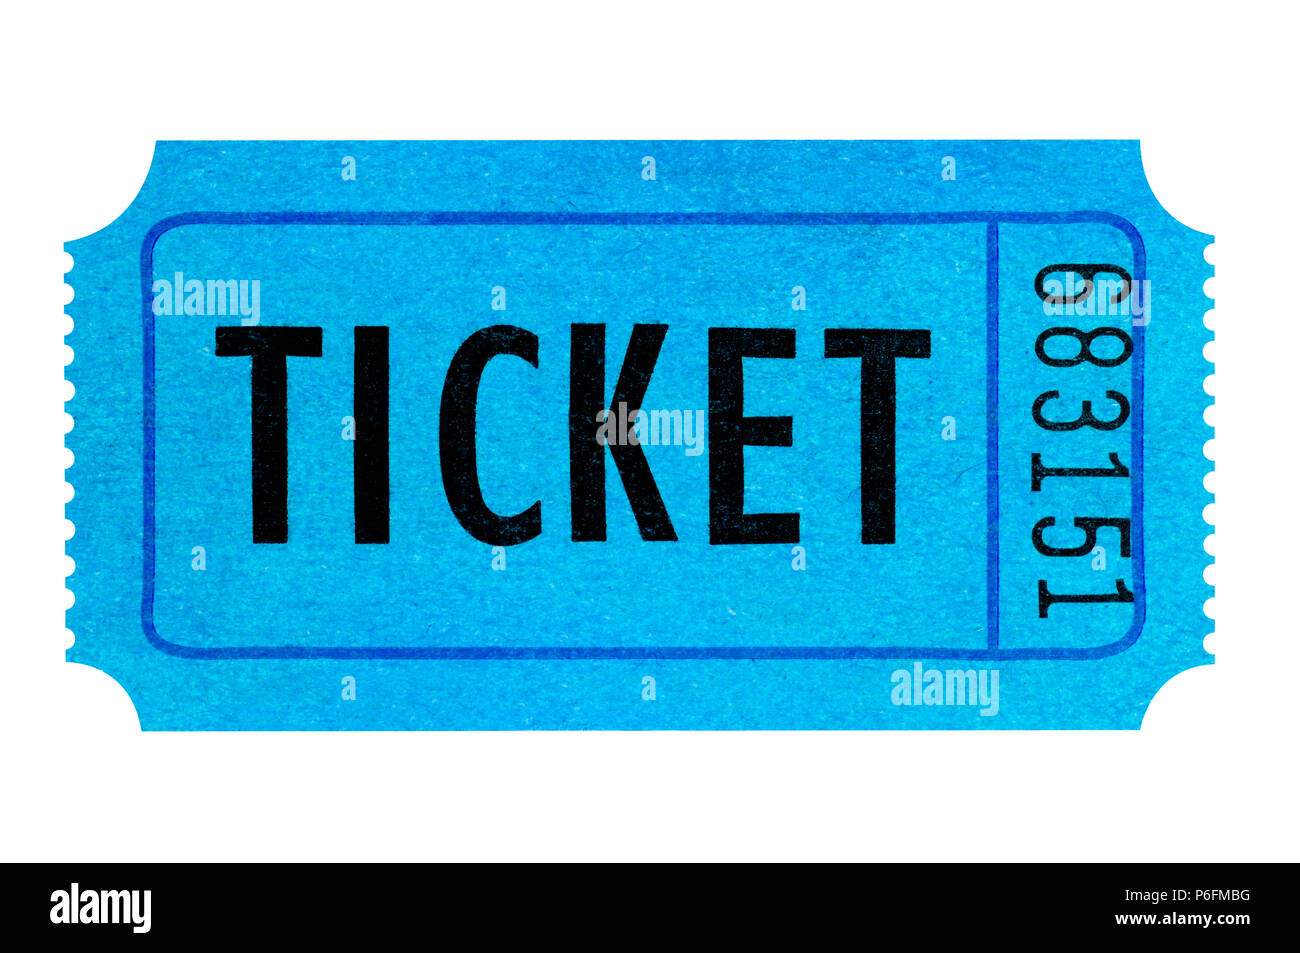 Blue ticket isolated on white background. Stock Photo